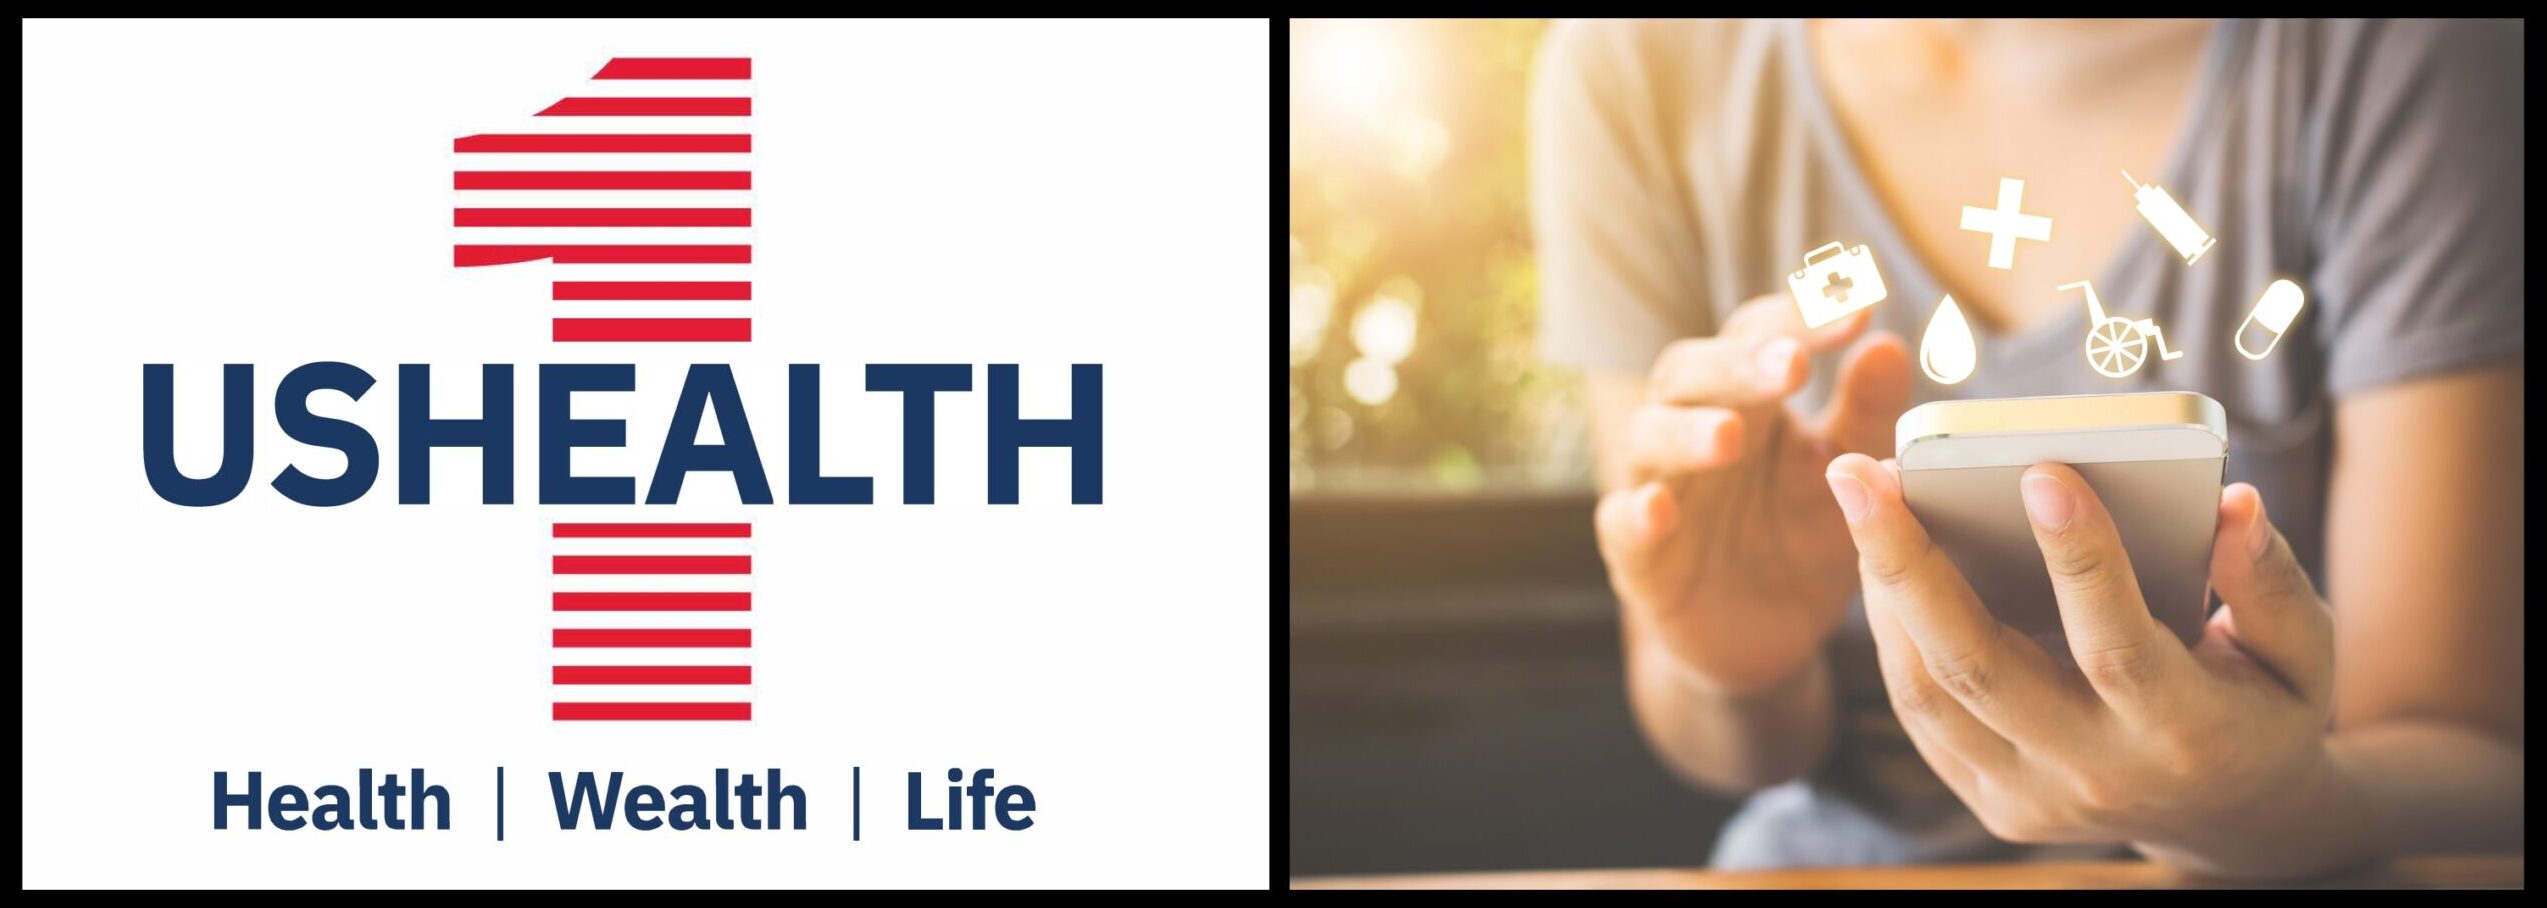 US Health1 logo image